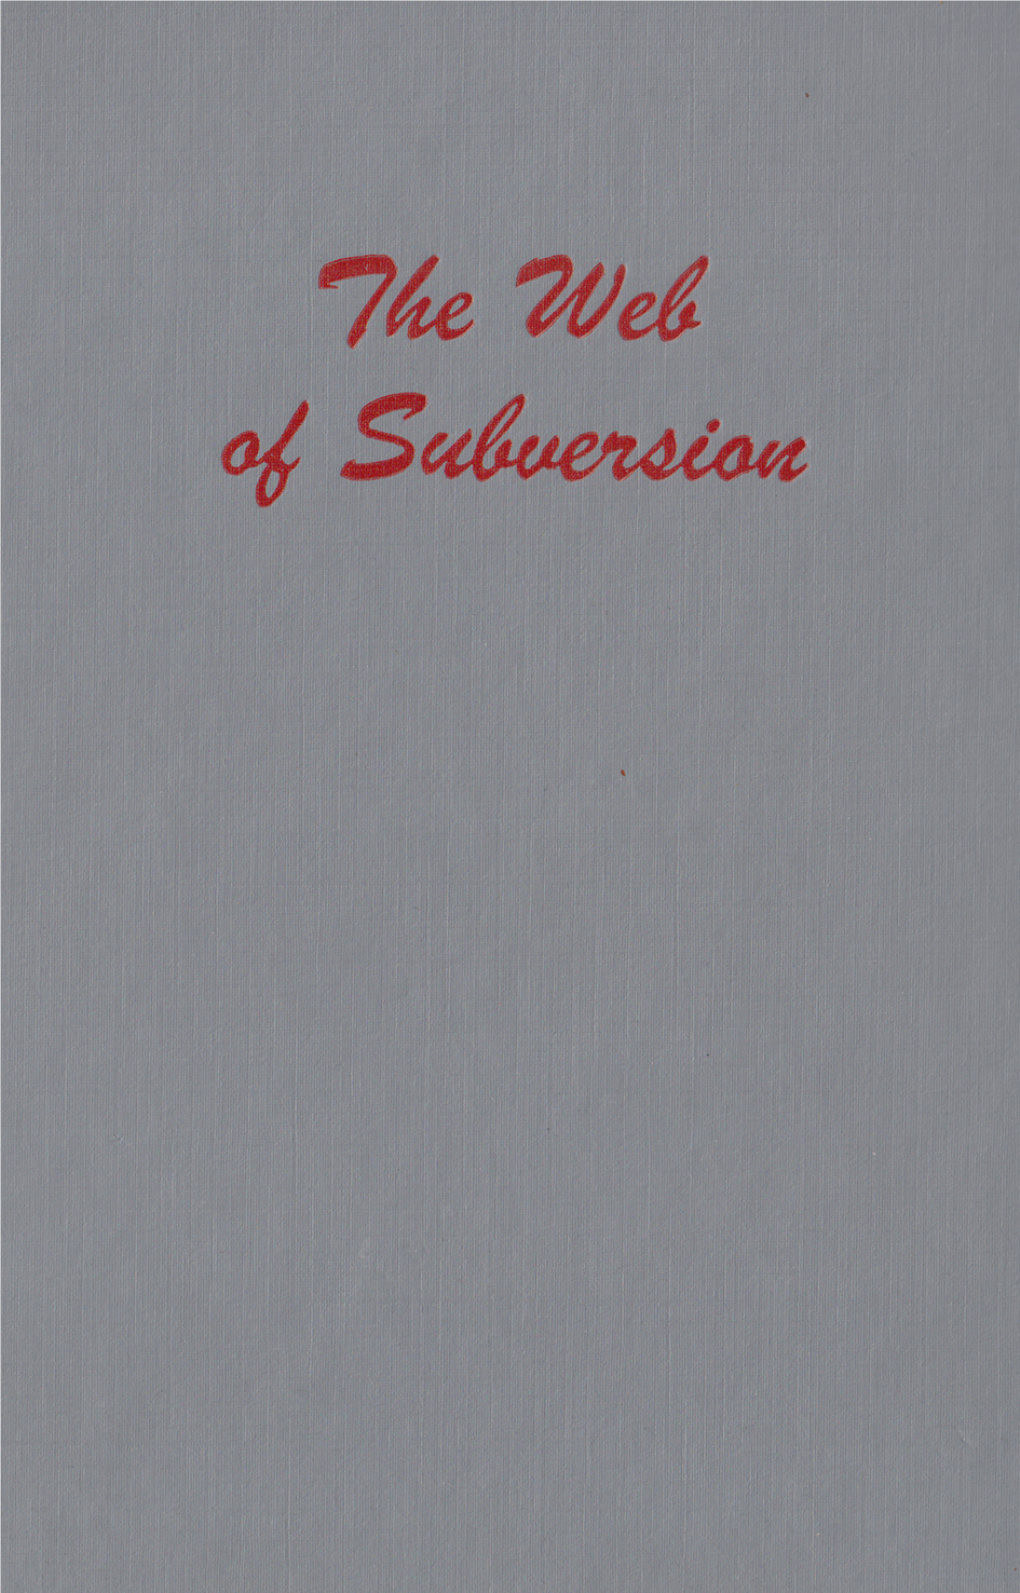 The Web of Subversion BOOKSBYJAMESBURNHAM